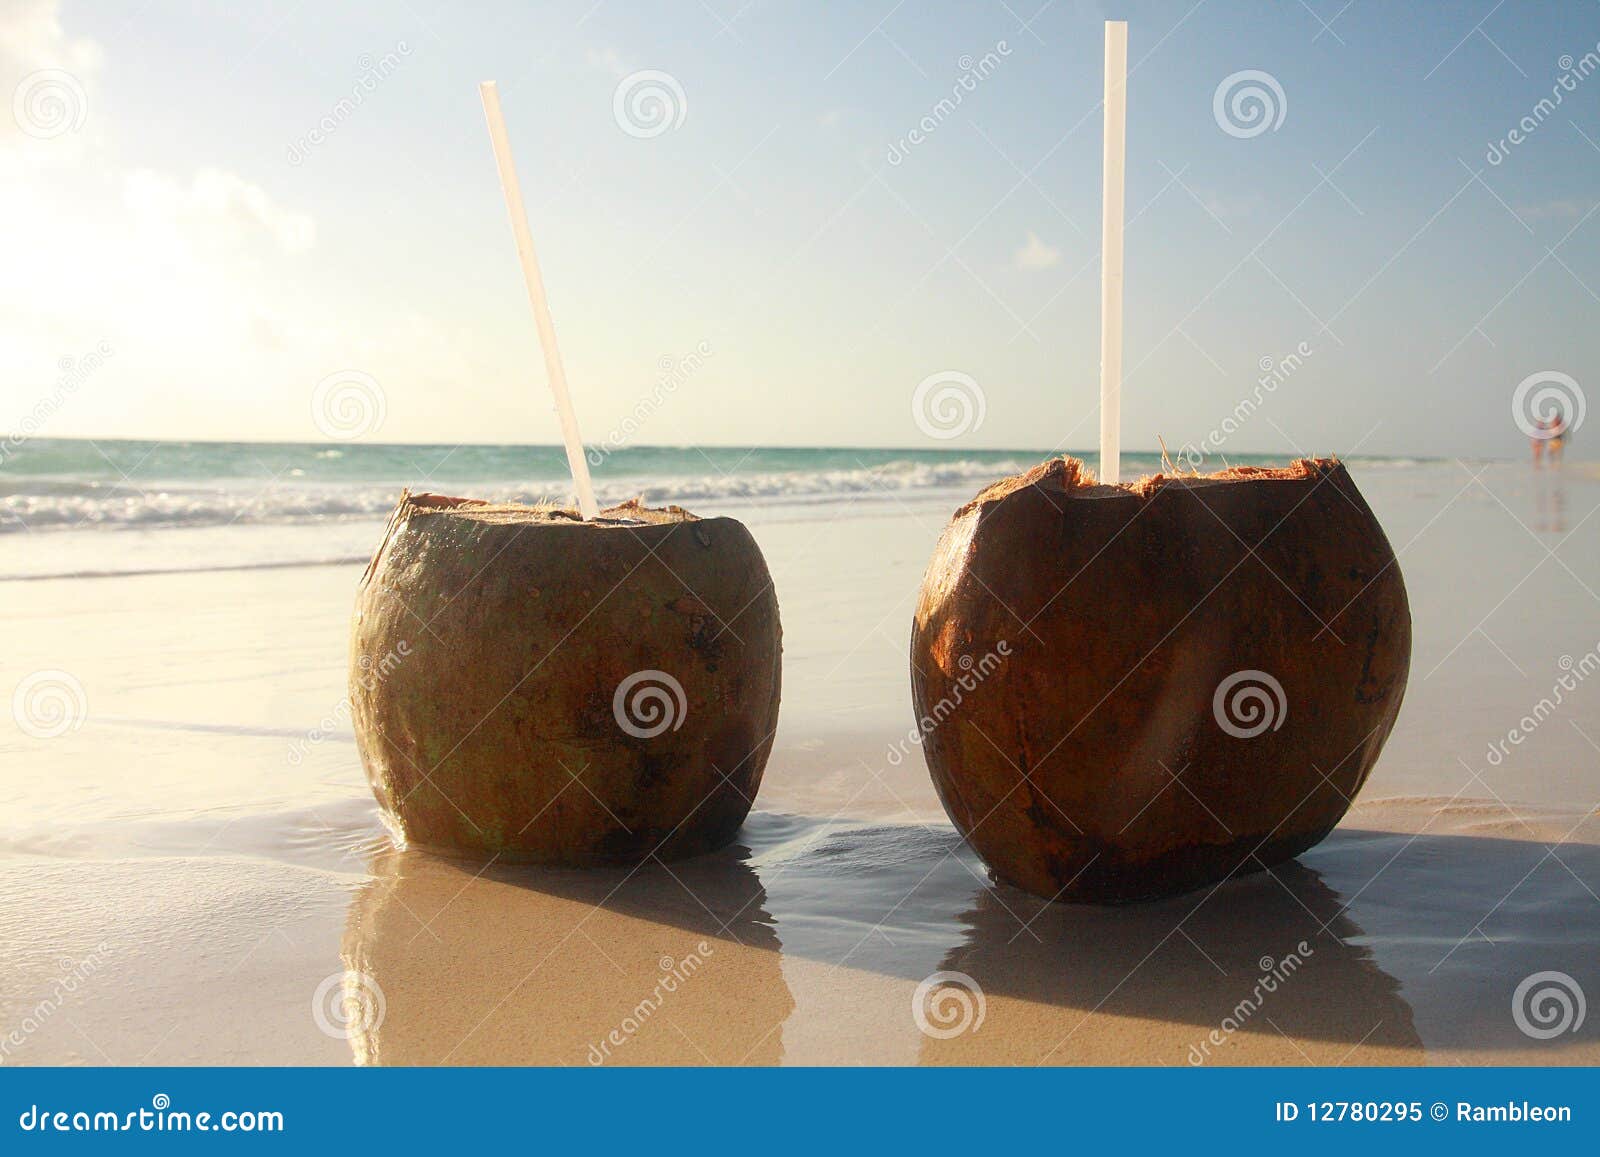 Beach Drinks stock image. Image of drink, liquor, beach - 12780295